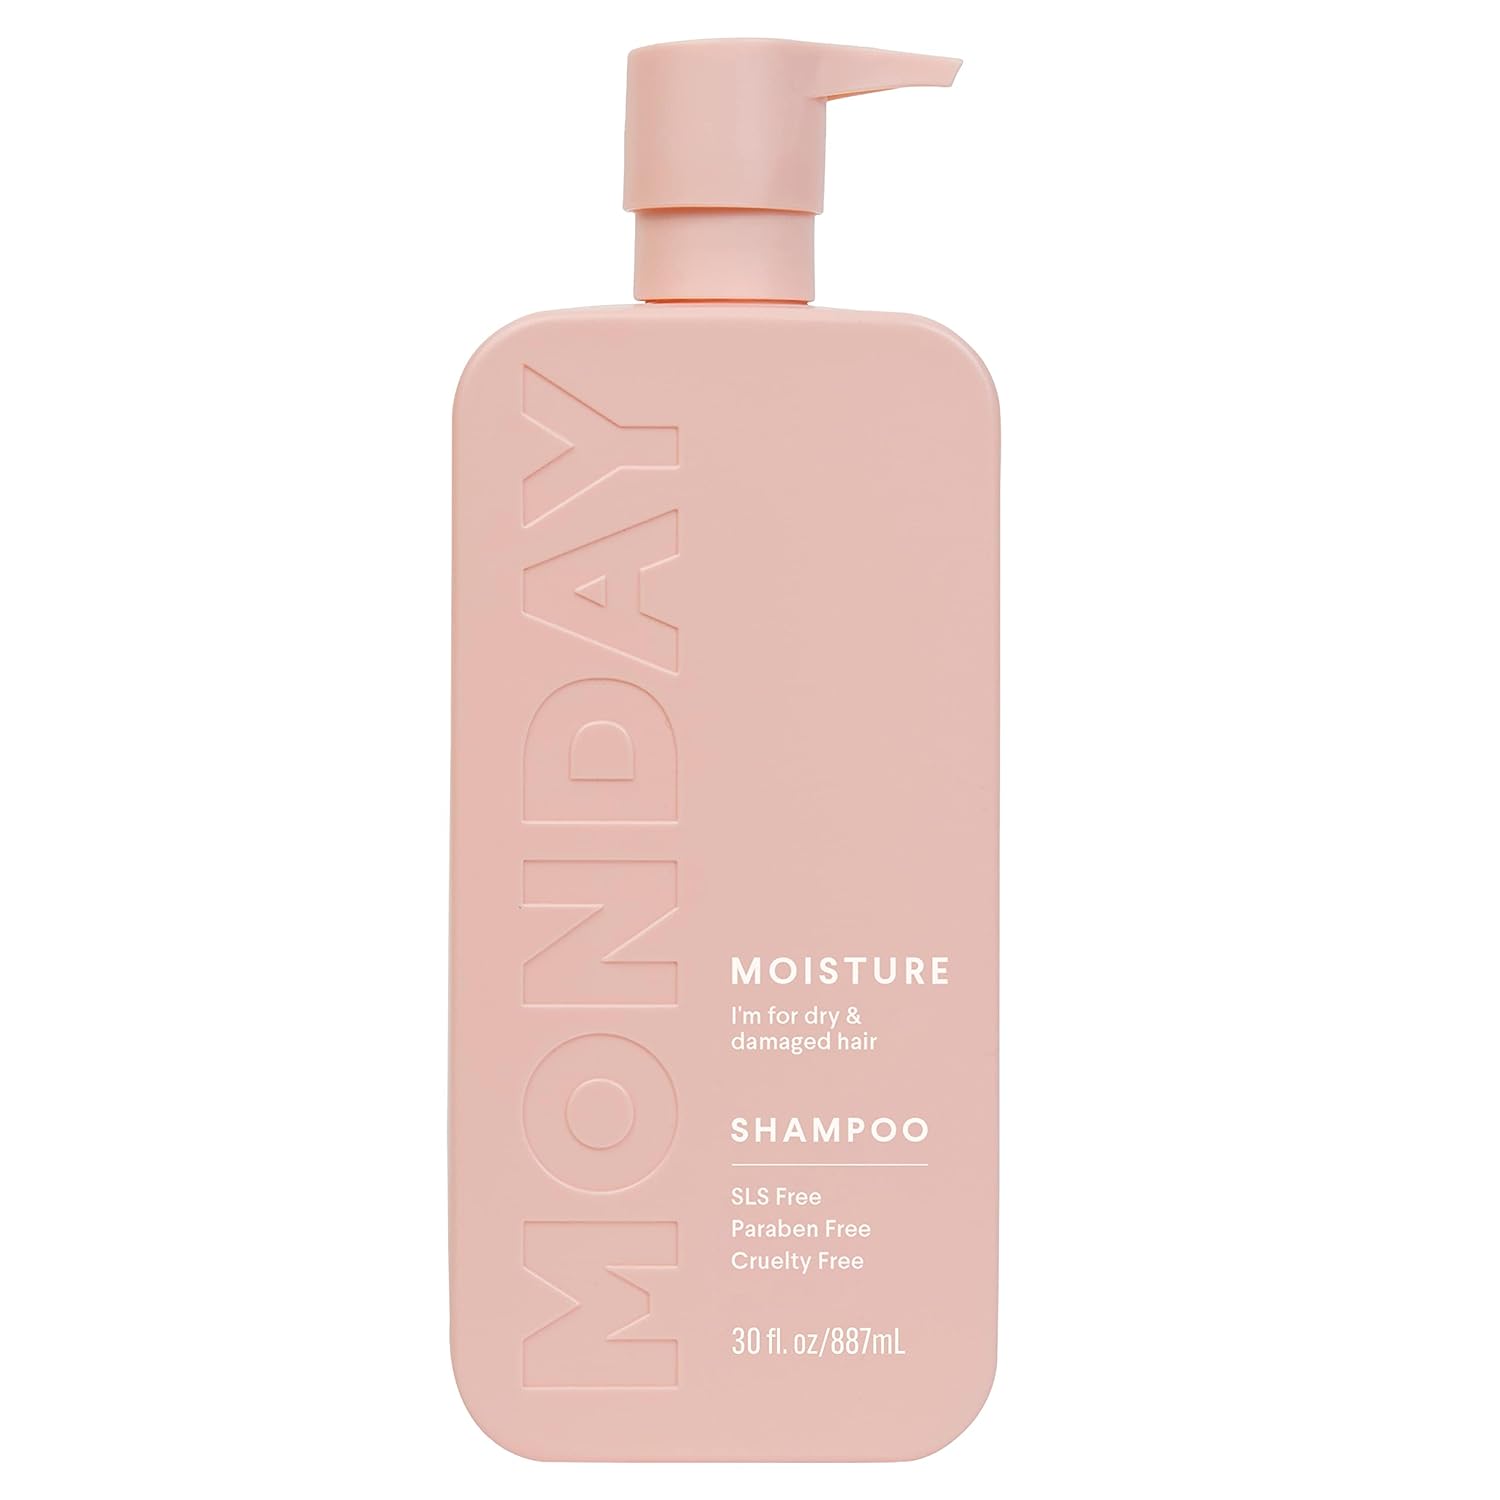 MONDAY HAIRCARE Moisture Shampoo Review